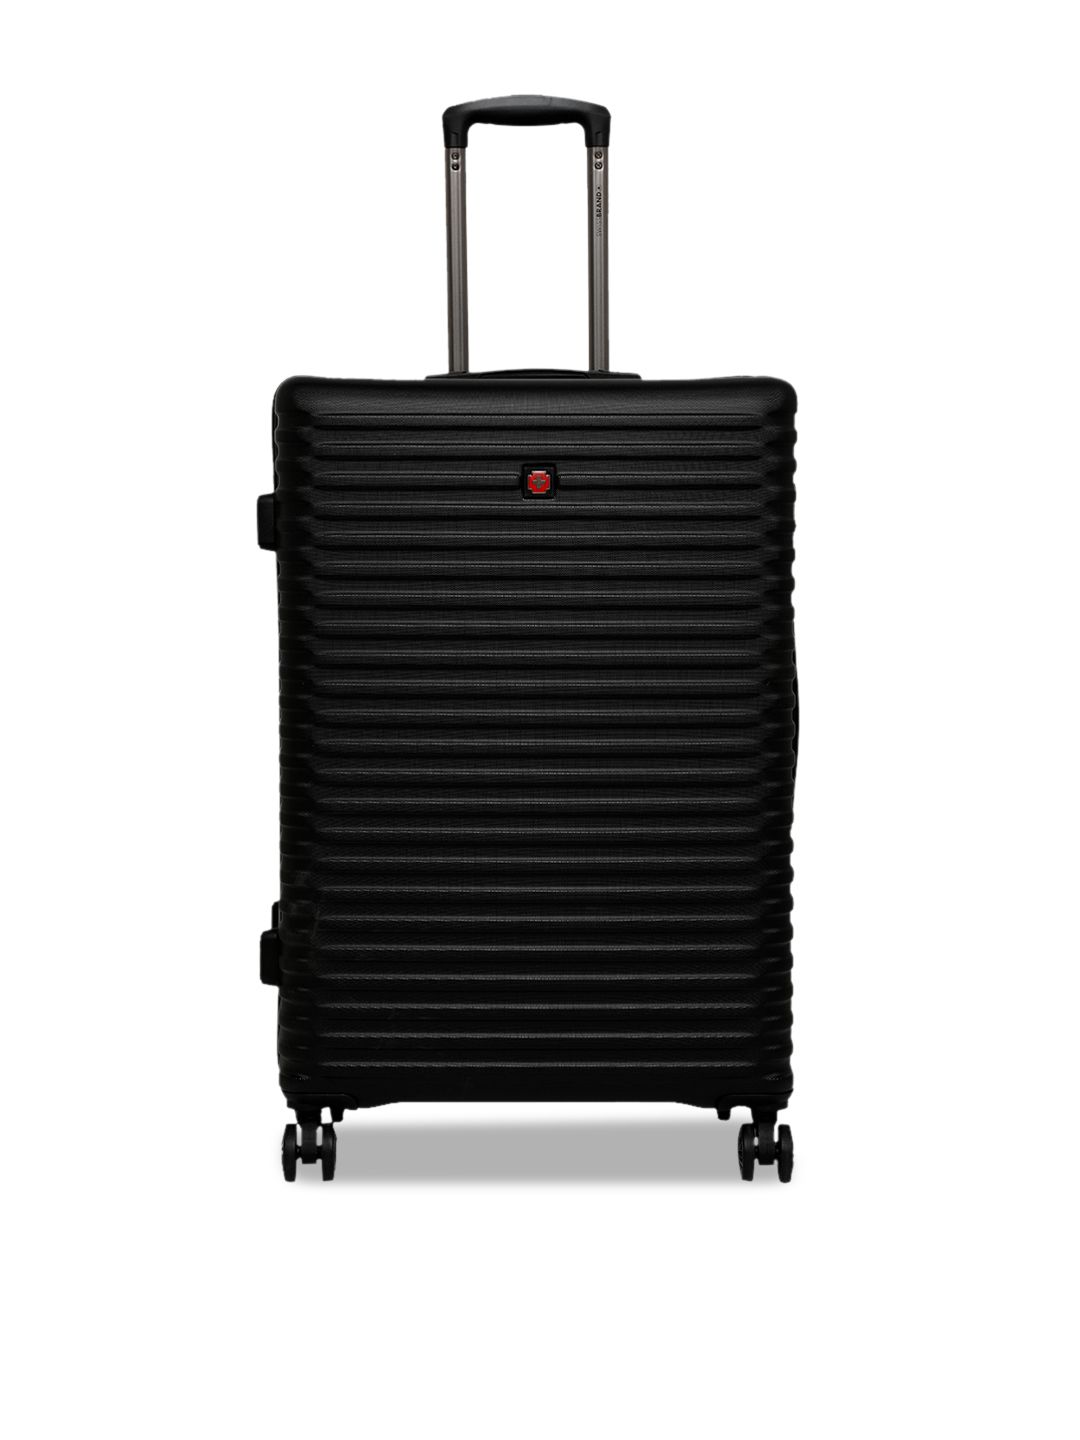 SWISSBRAND DUBLIN  Range Black Color Hard Large Luggage Price in India